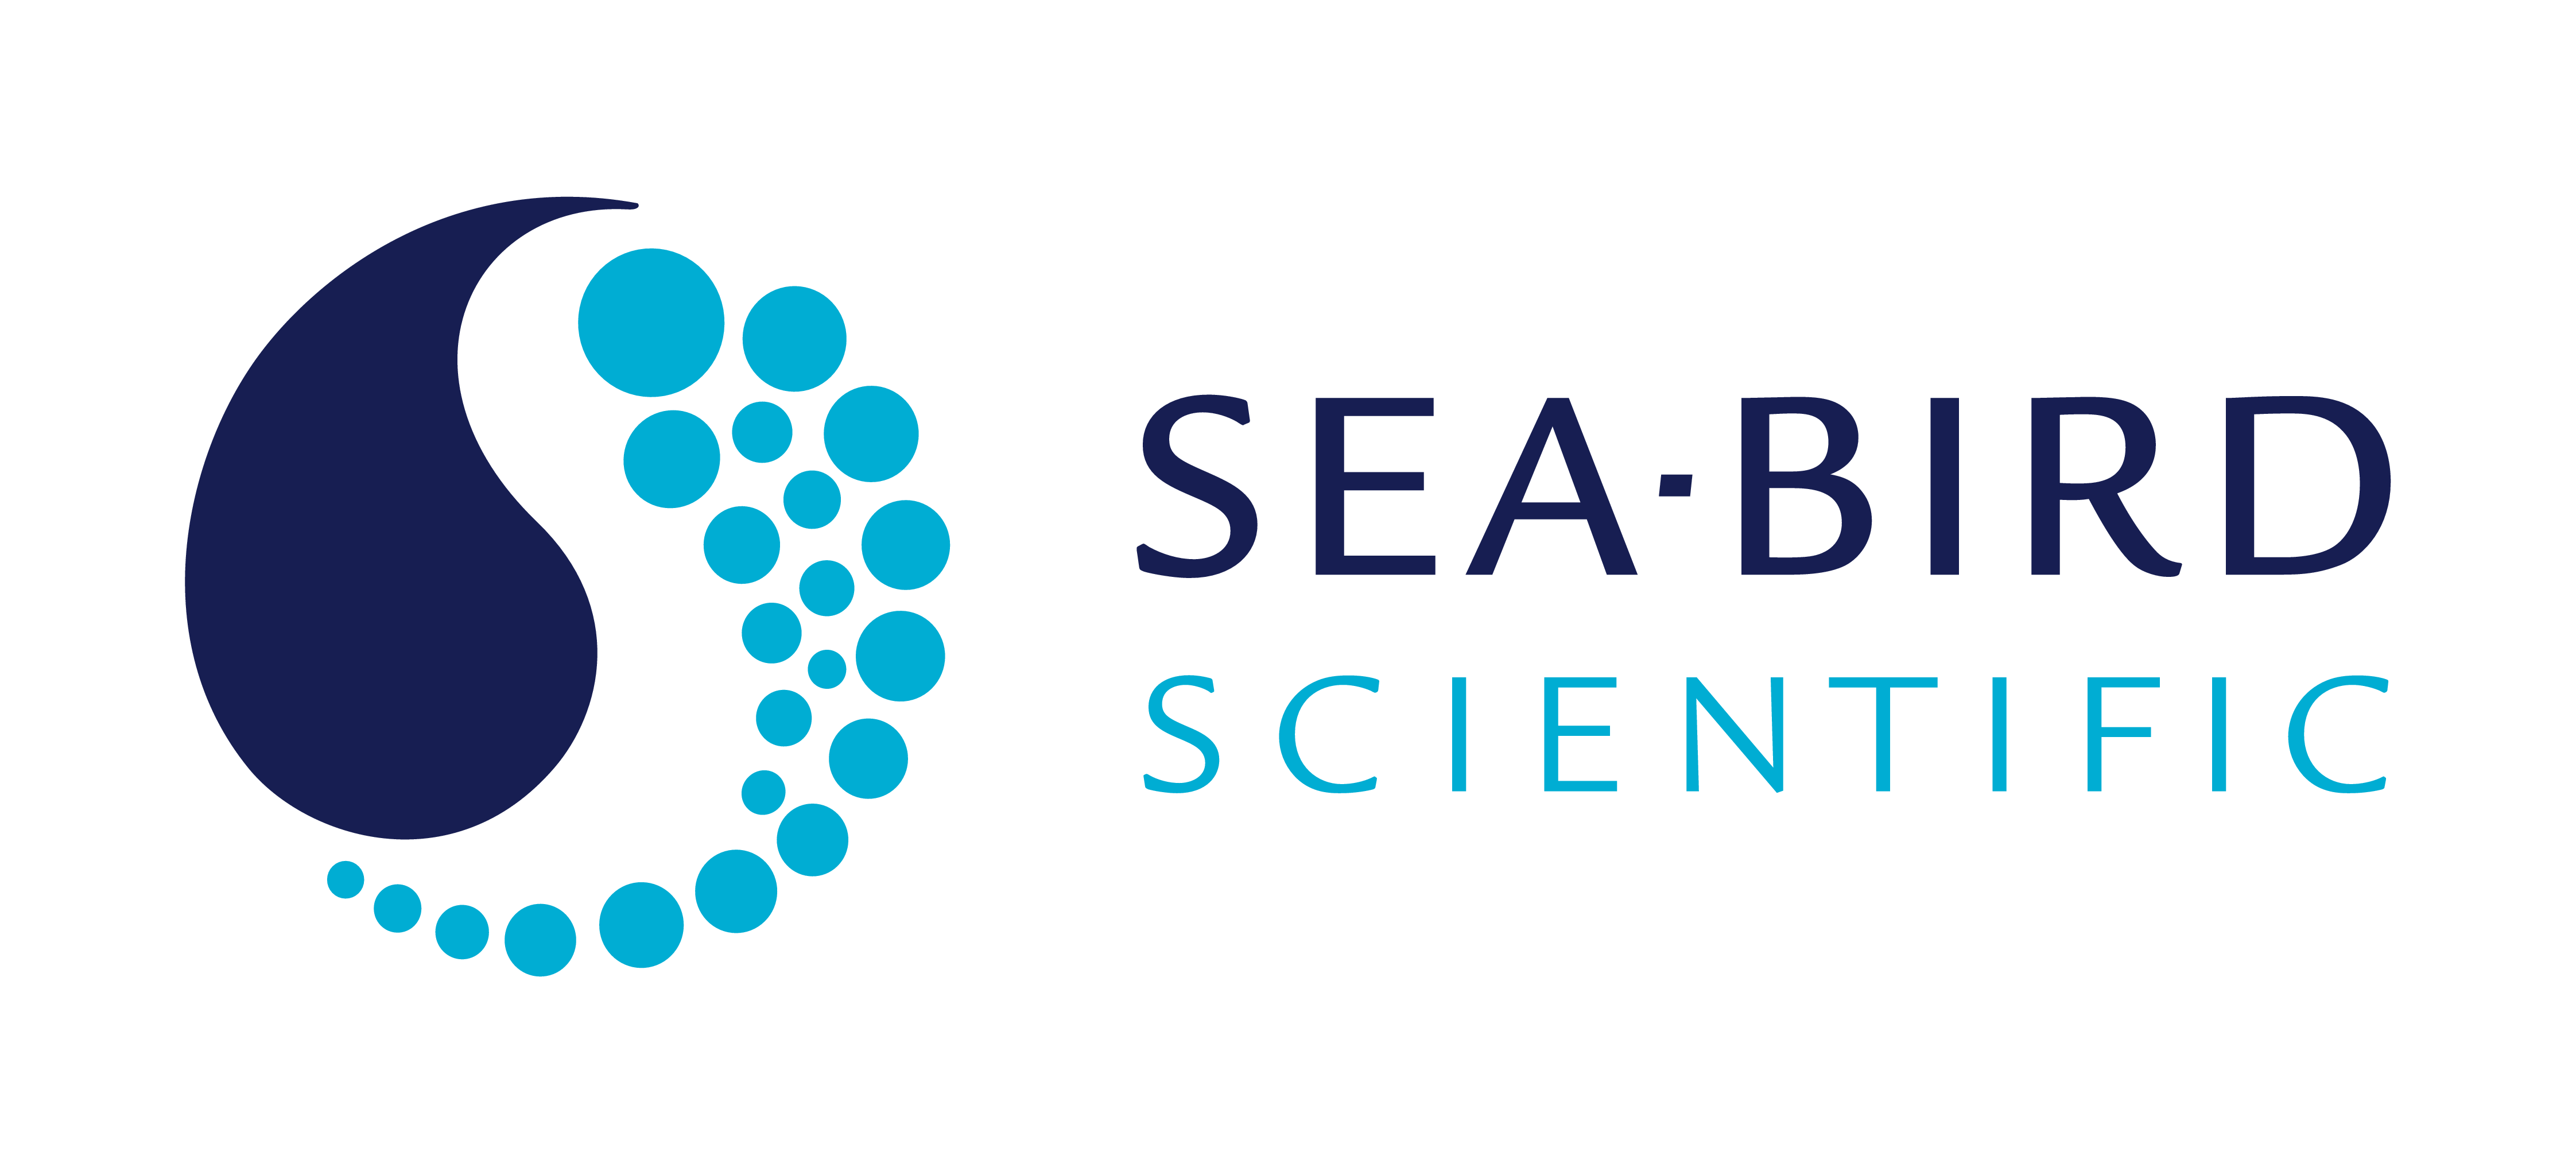 Seabird logo